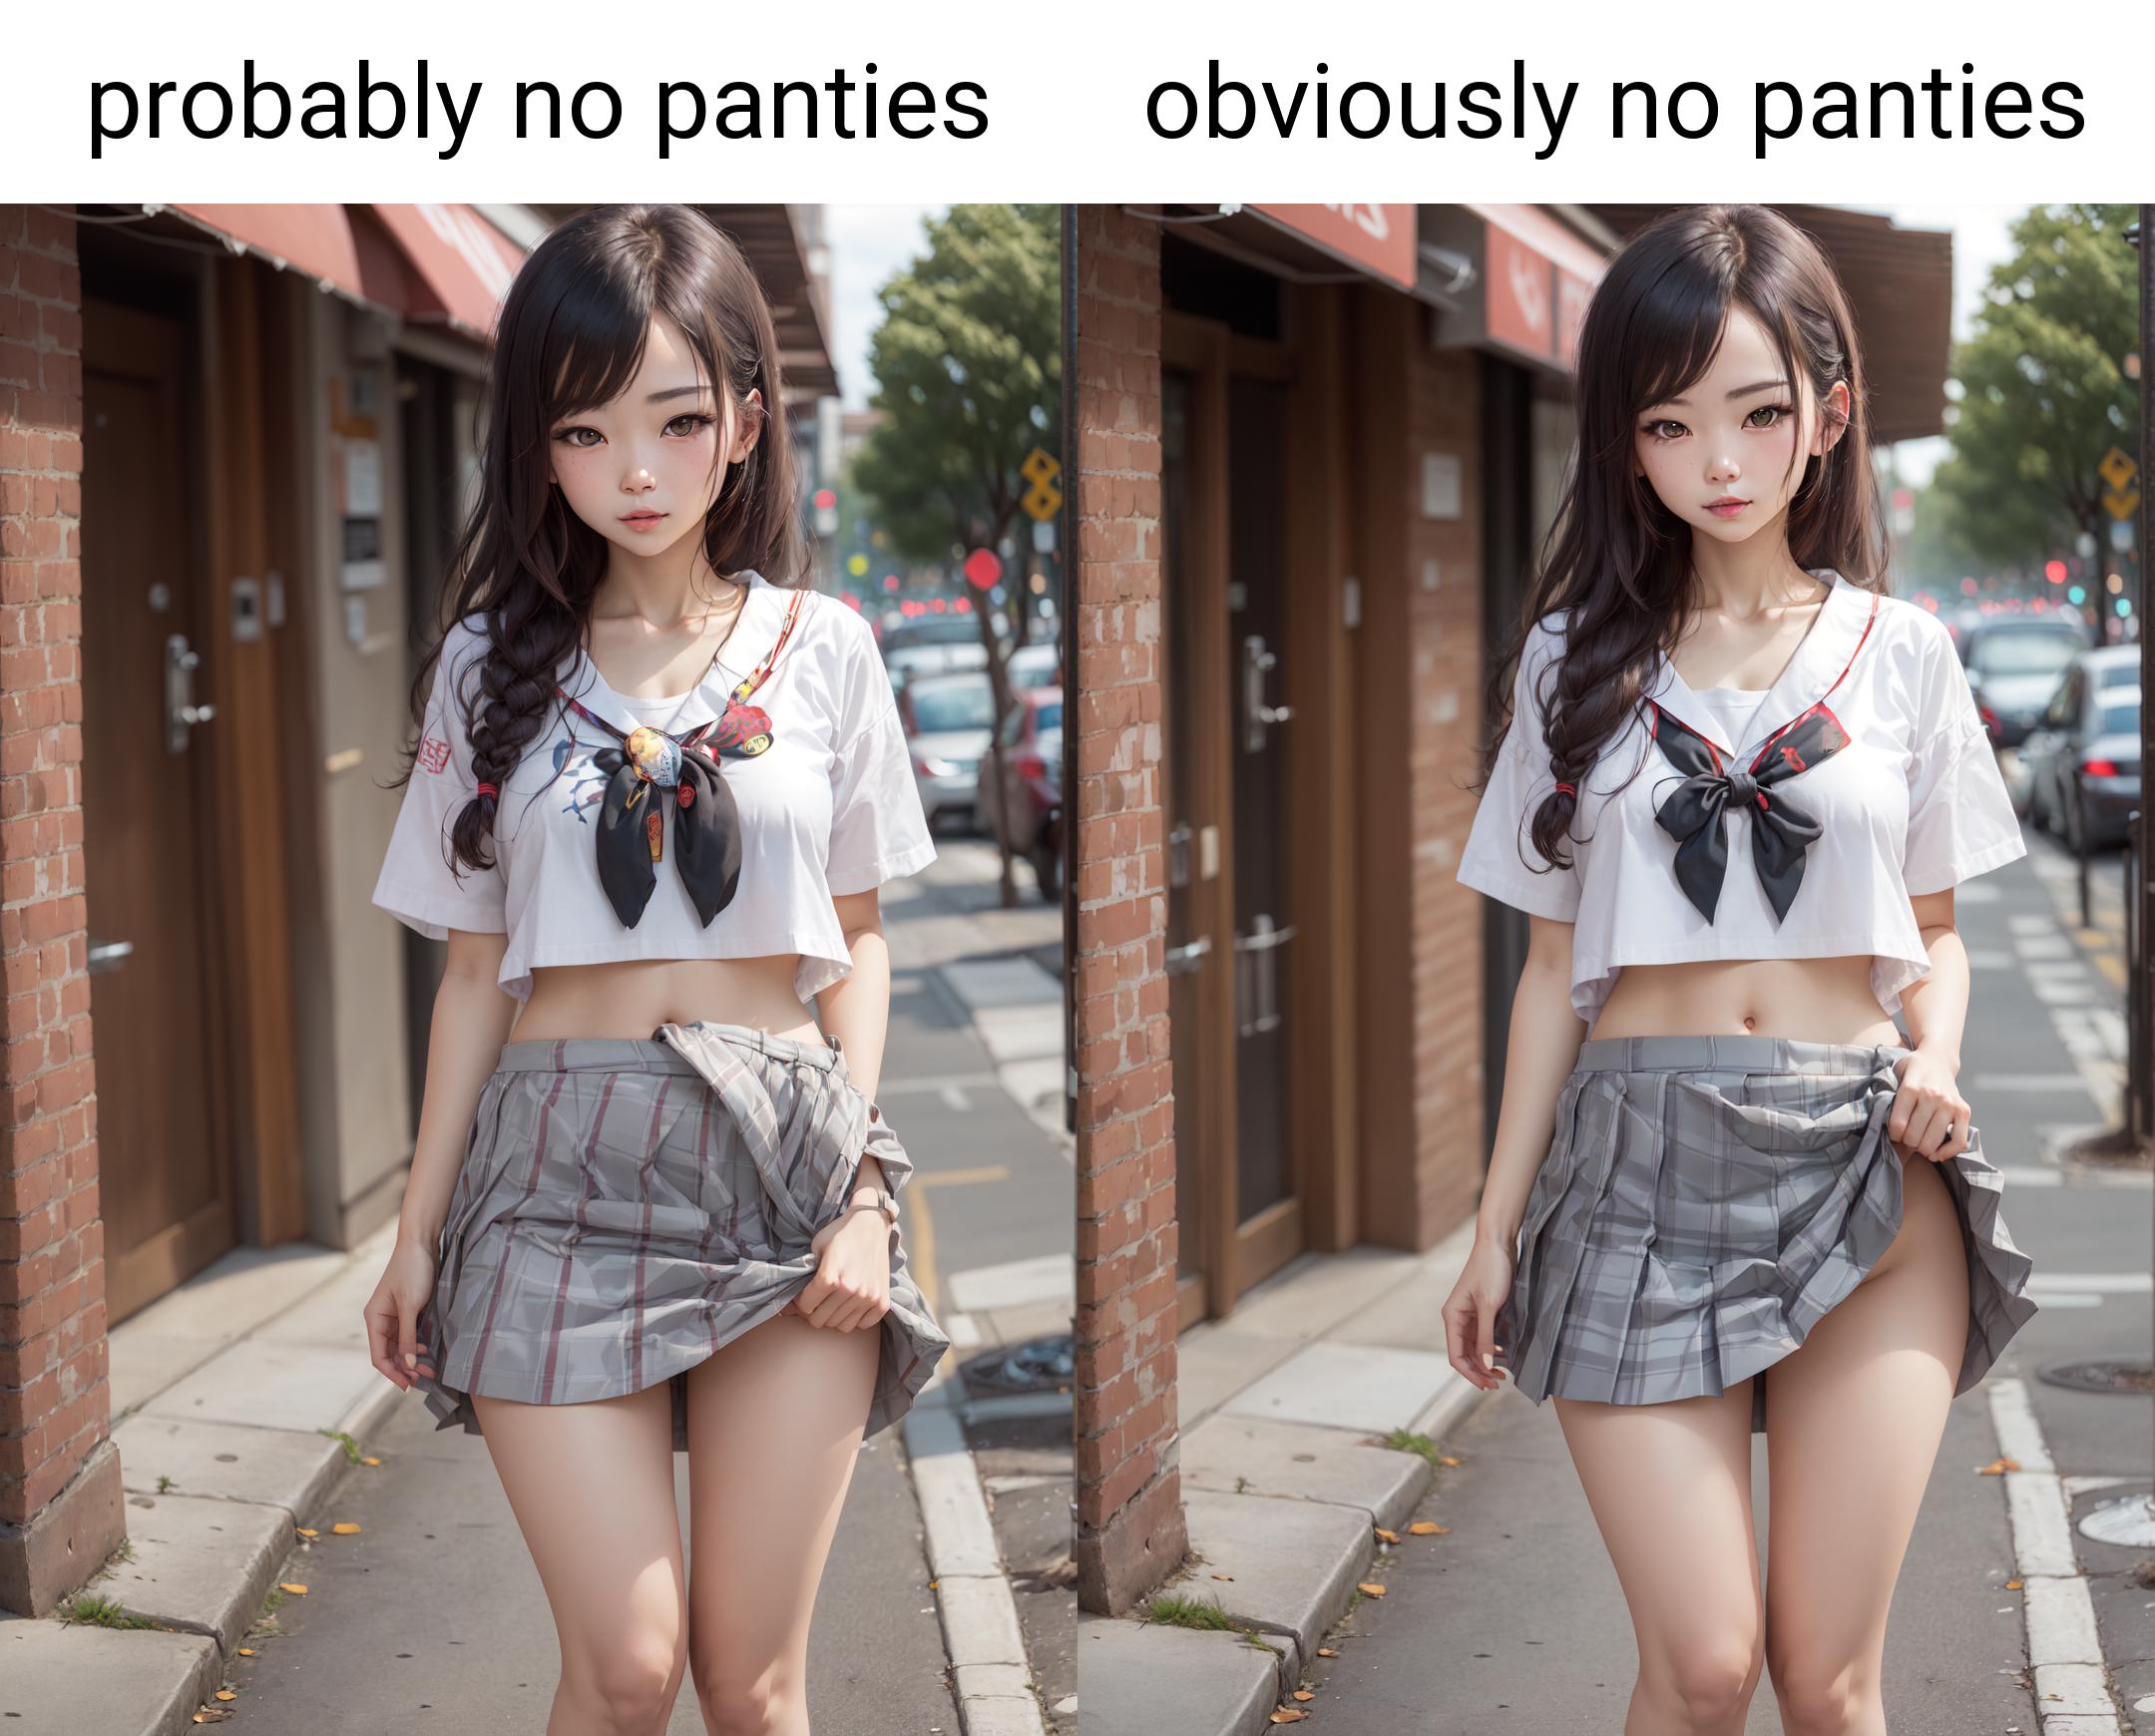 No Panties? (Hidden Privates) image by wewewew